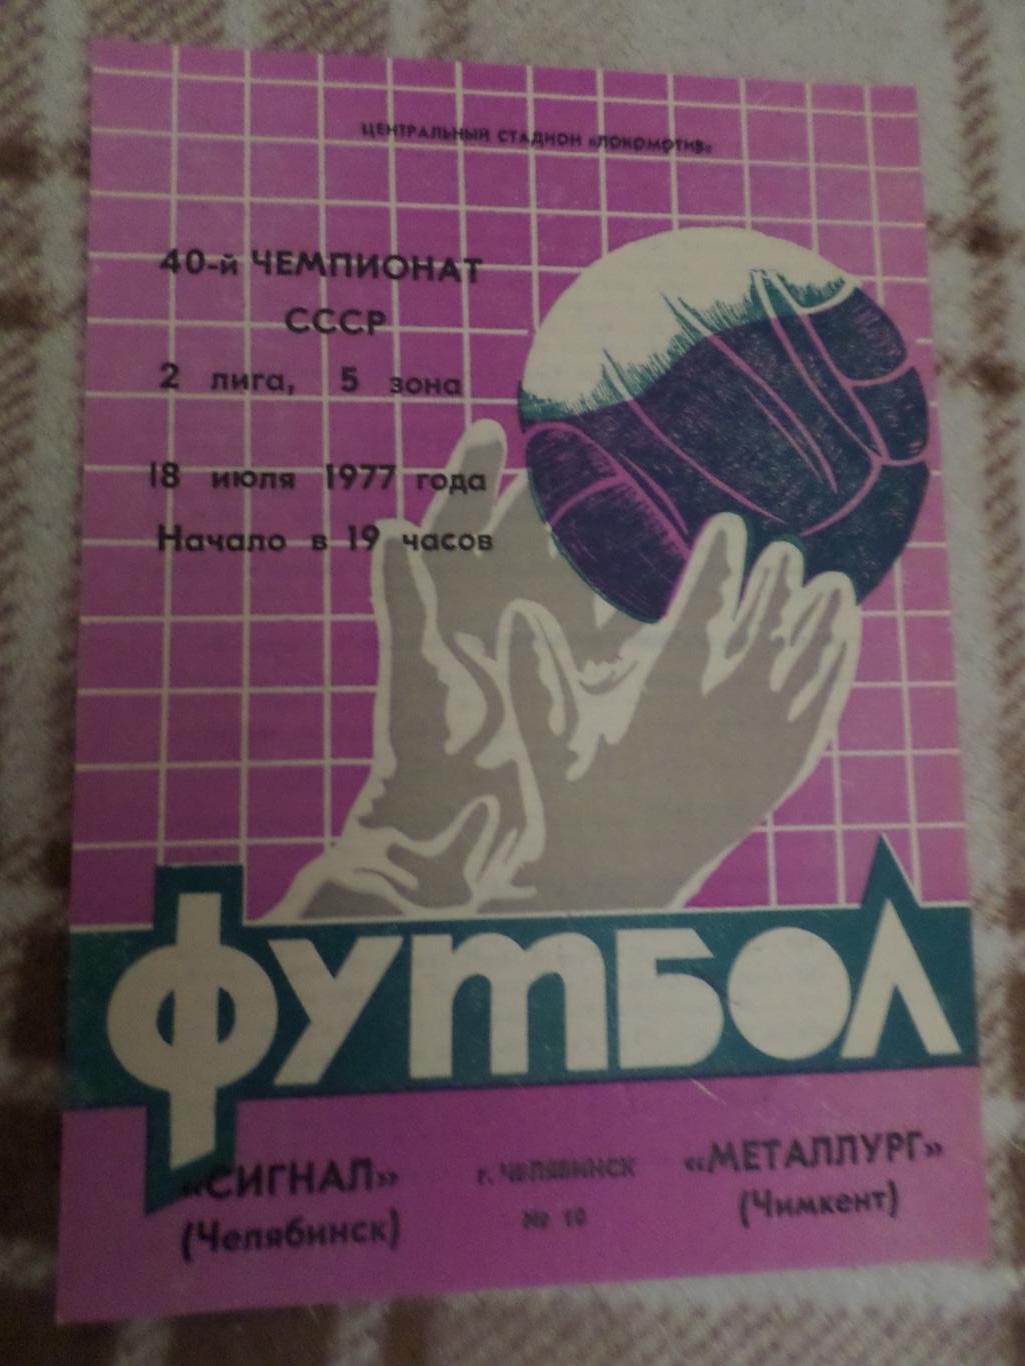 программа Сигнал Челябинск - Металлург Чимкент 1977 г